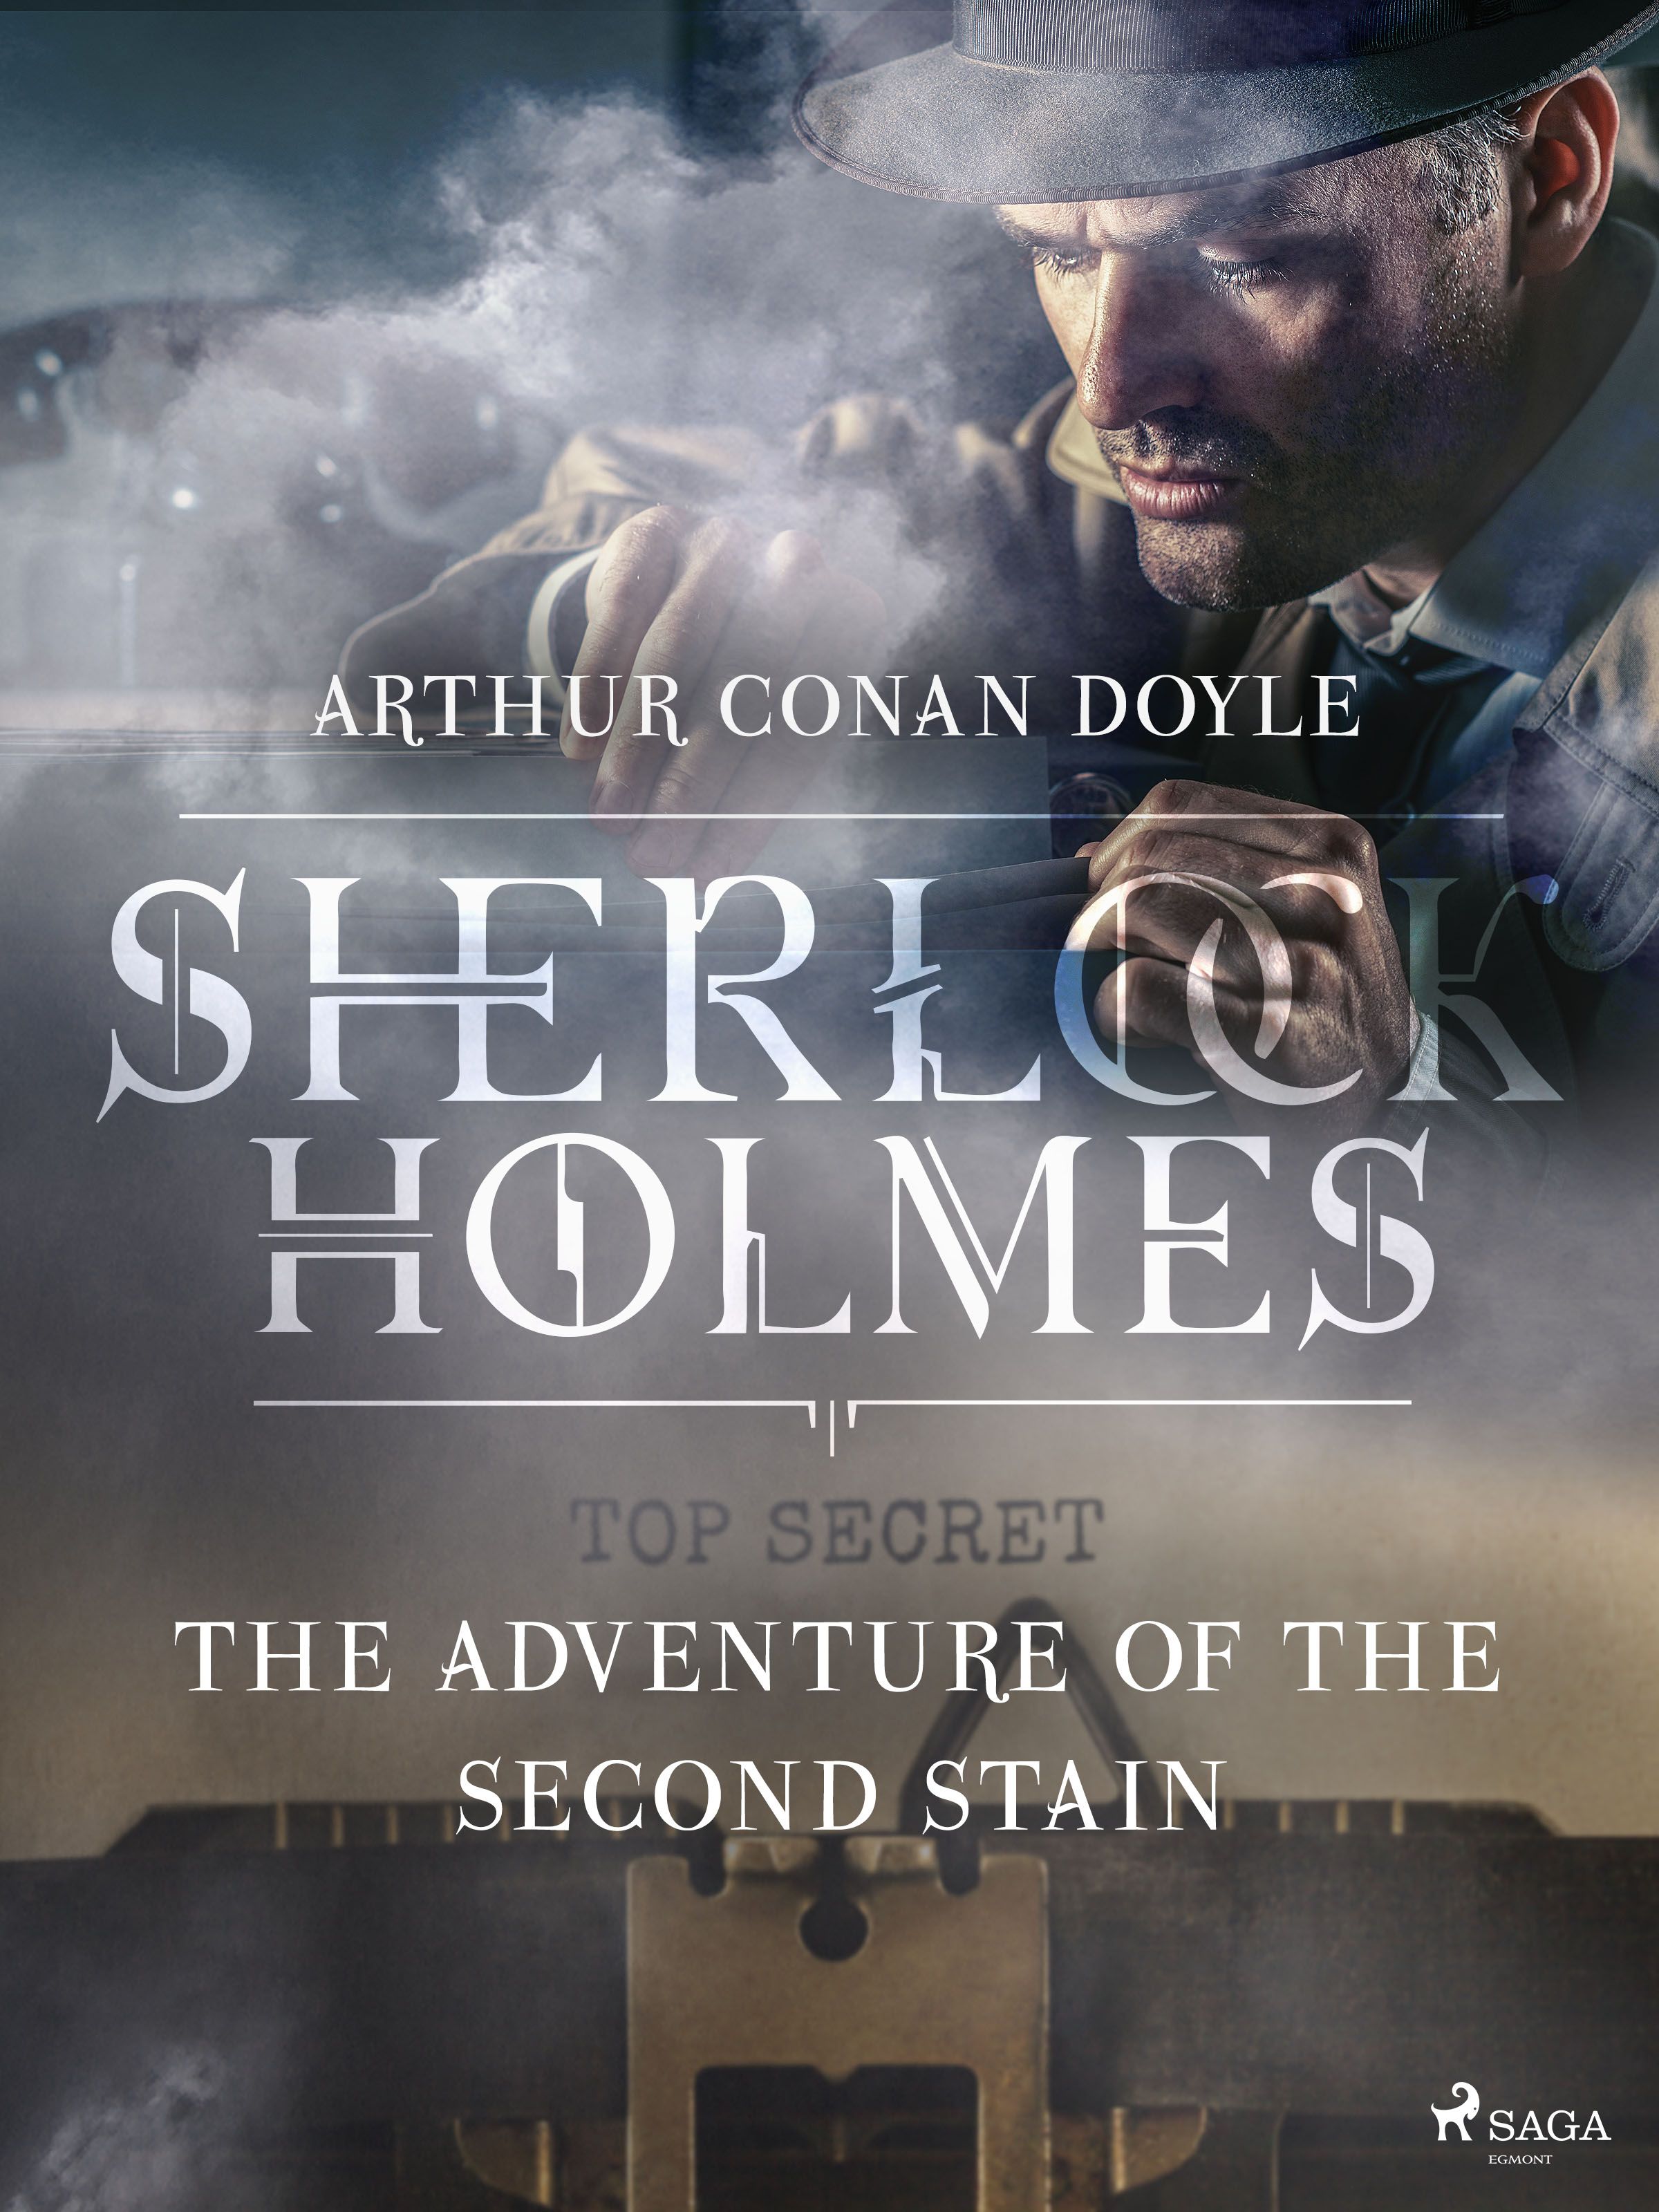 The Adventure of the Second Stain, e-bog af Arthur Conan Doyle